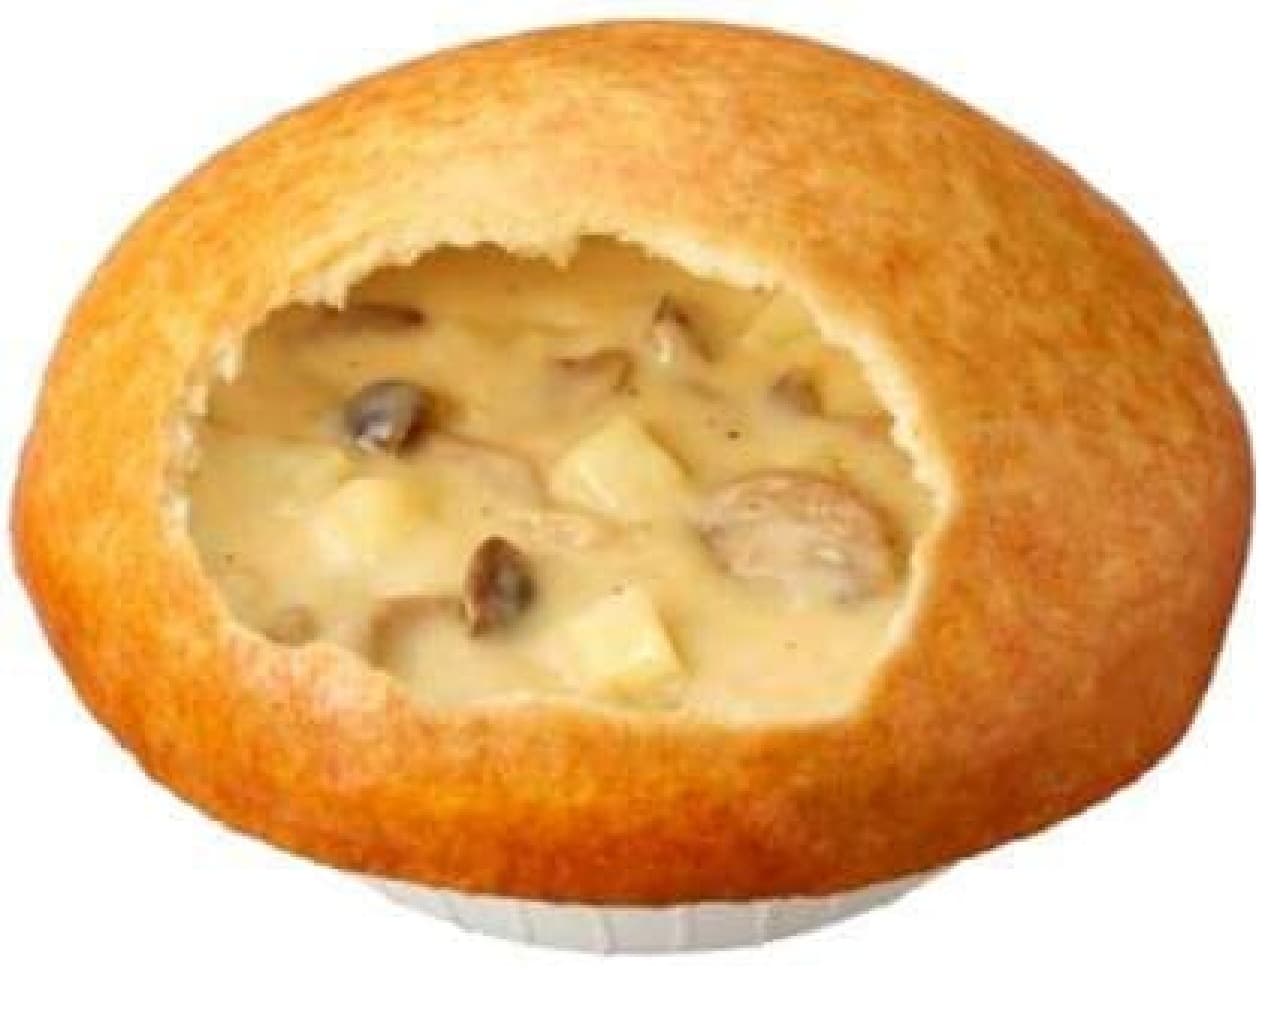 Mushroom pot pie with kentucky porcini